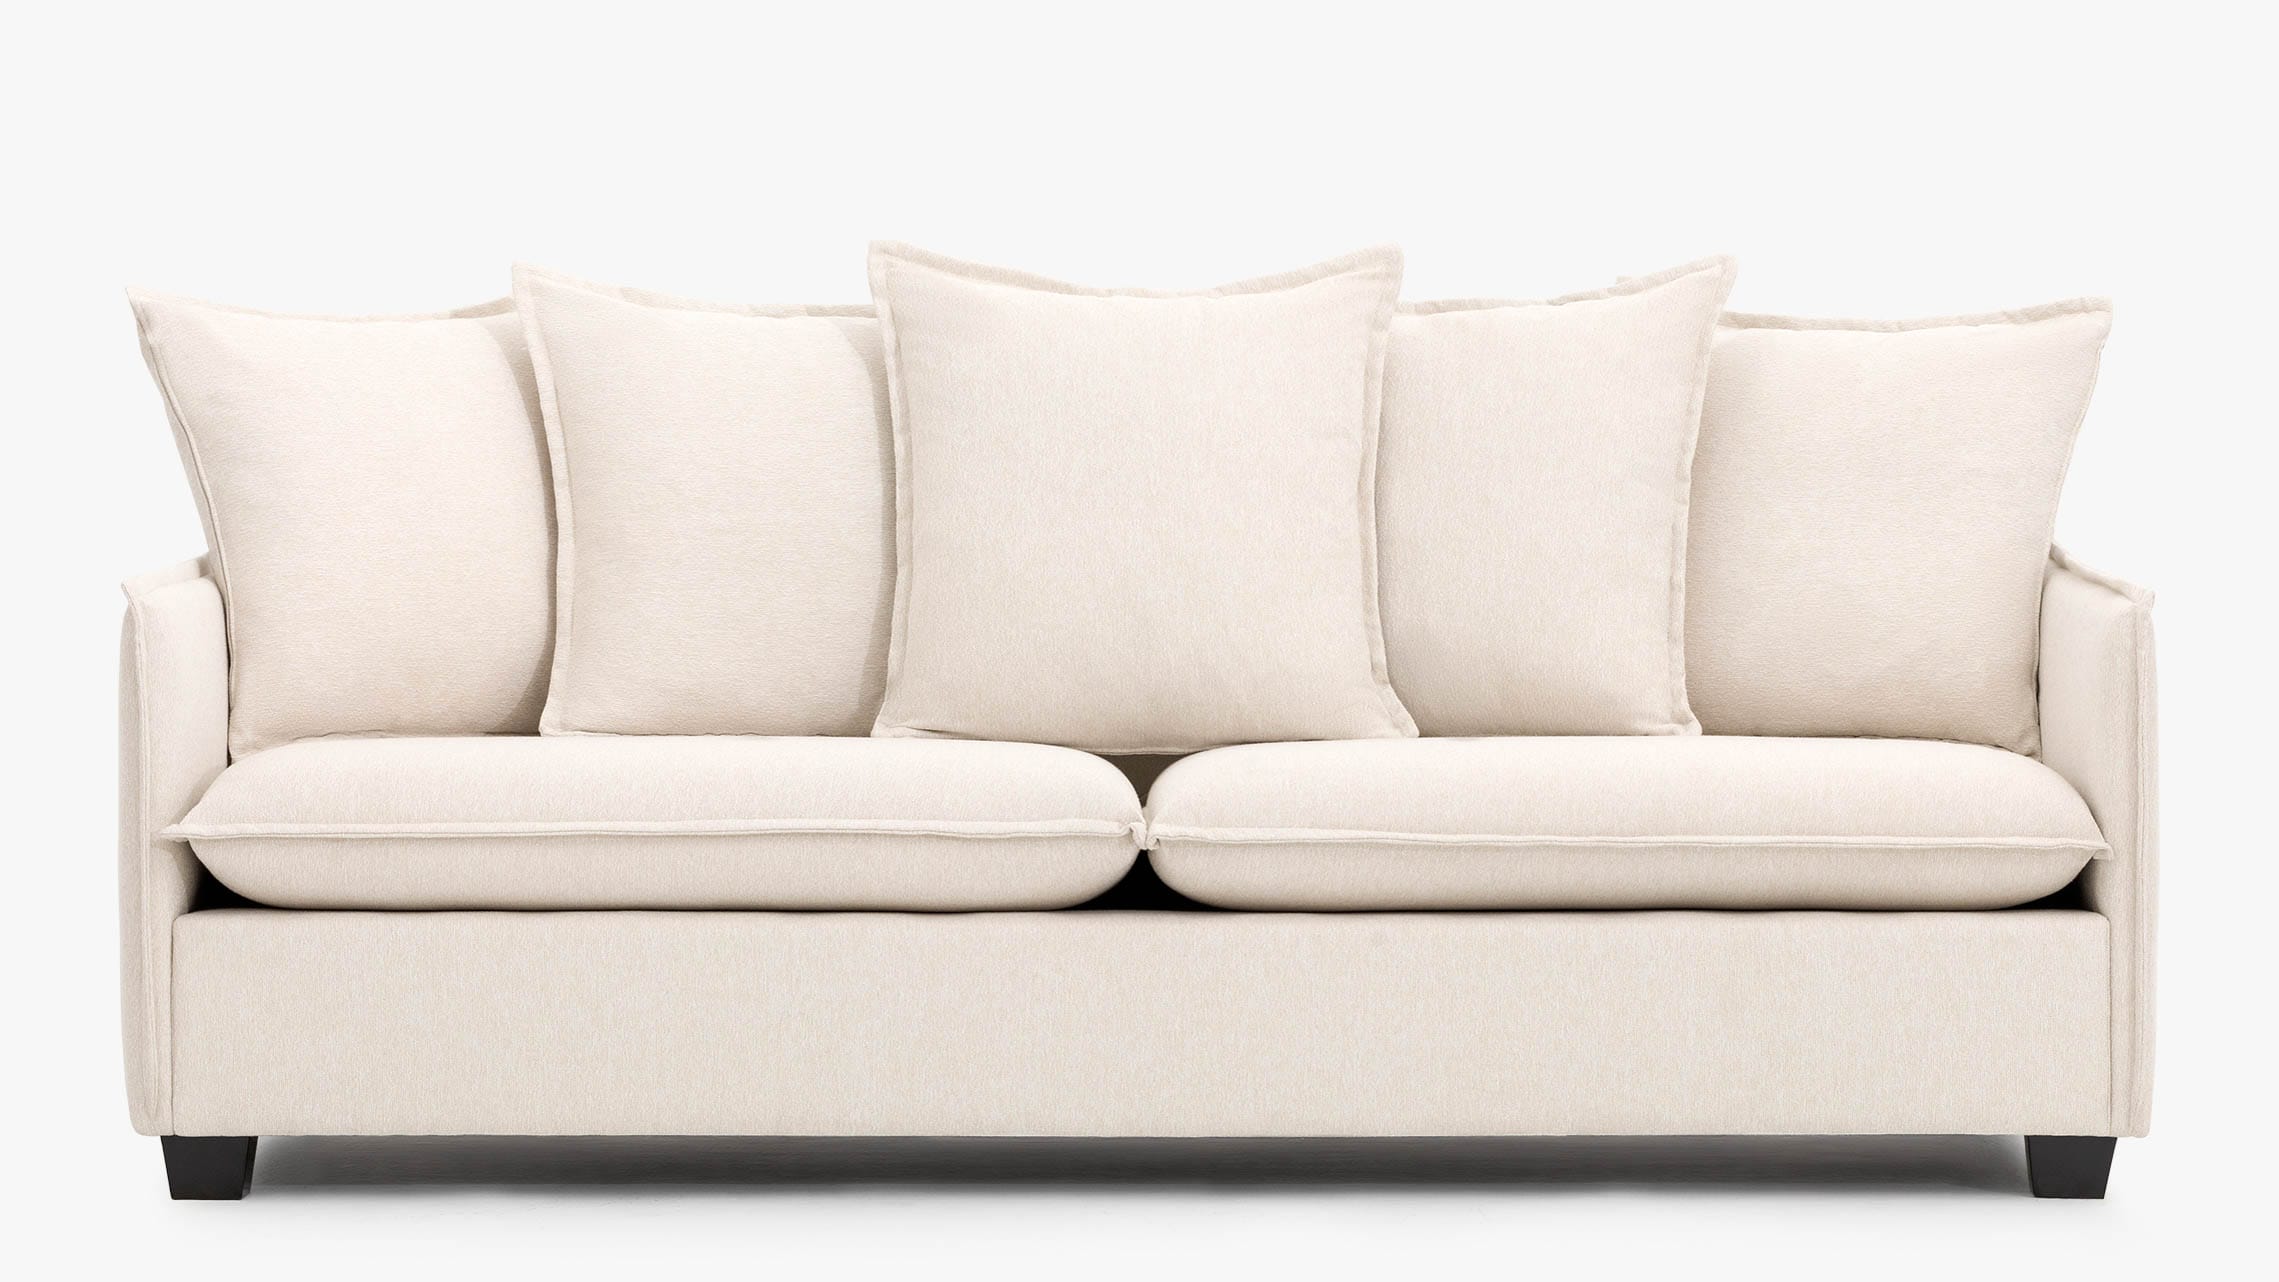 Structube sofa: Discovering Comfort